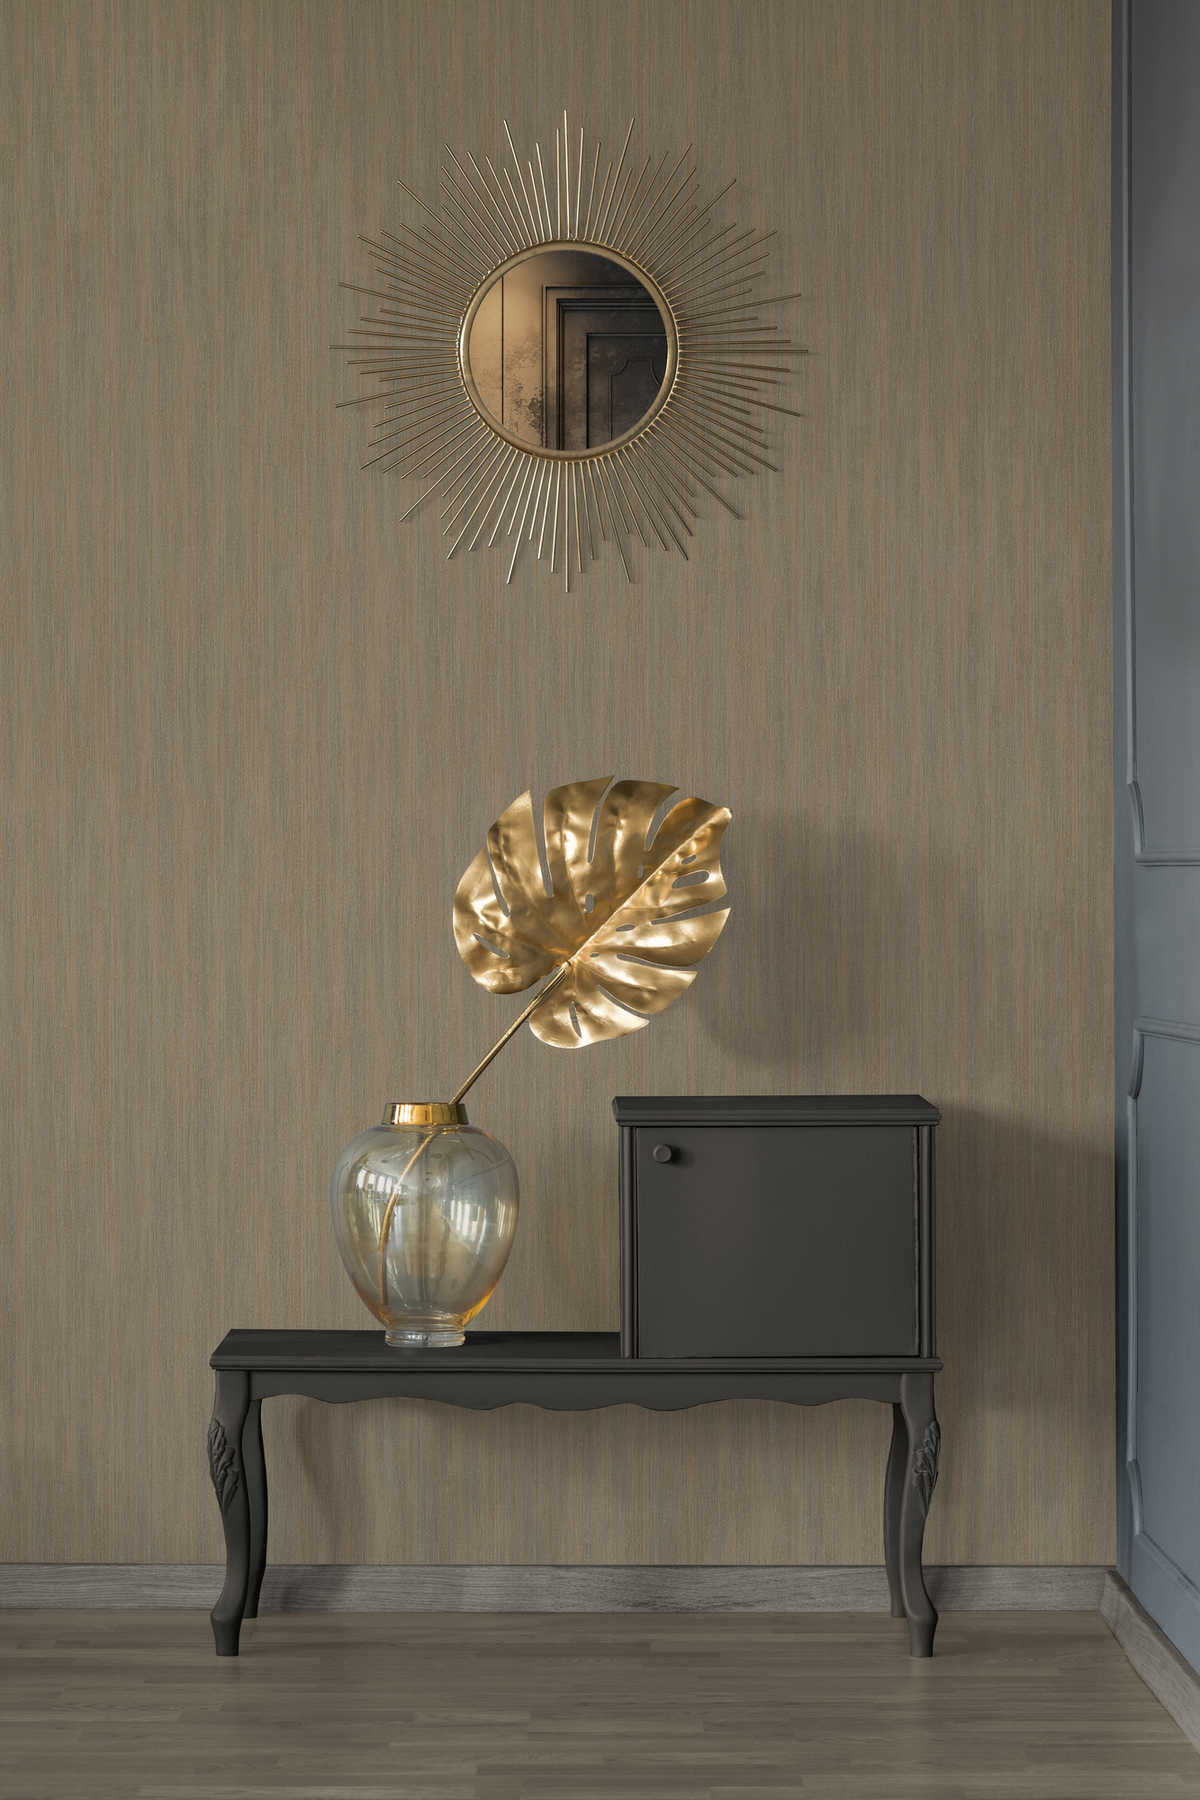             wallpaper brown gold mottled with satin sheen
        